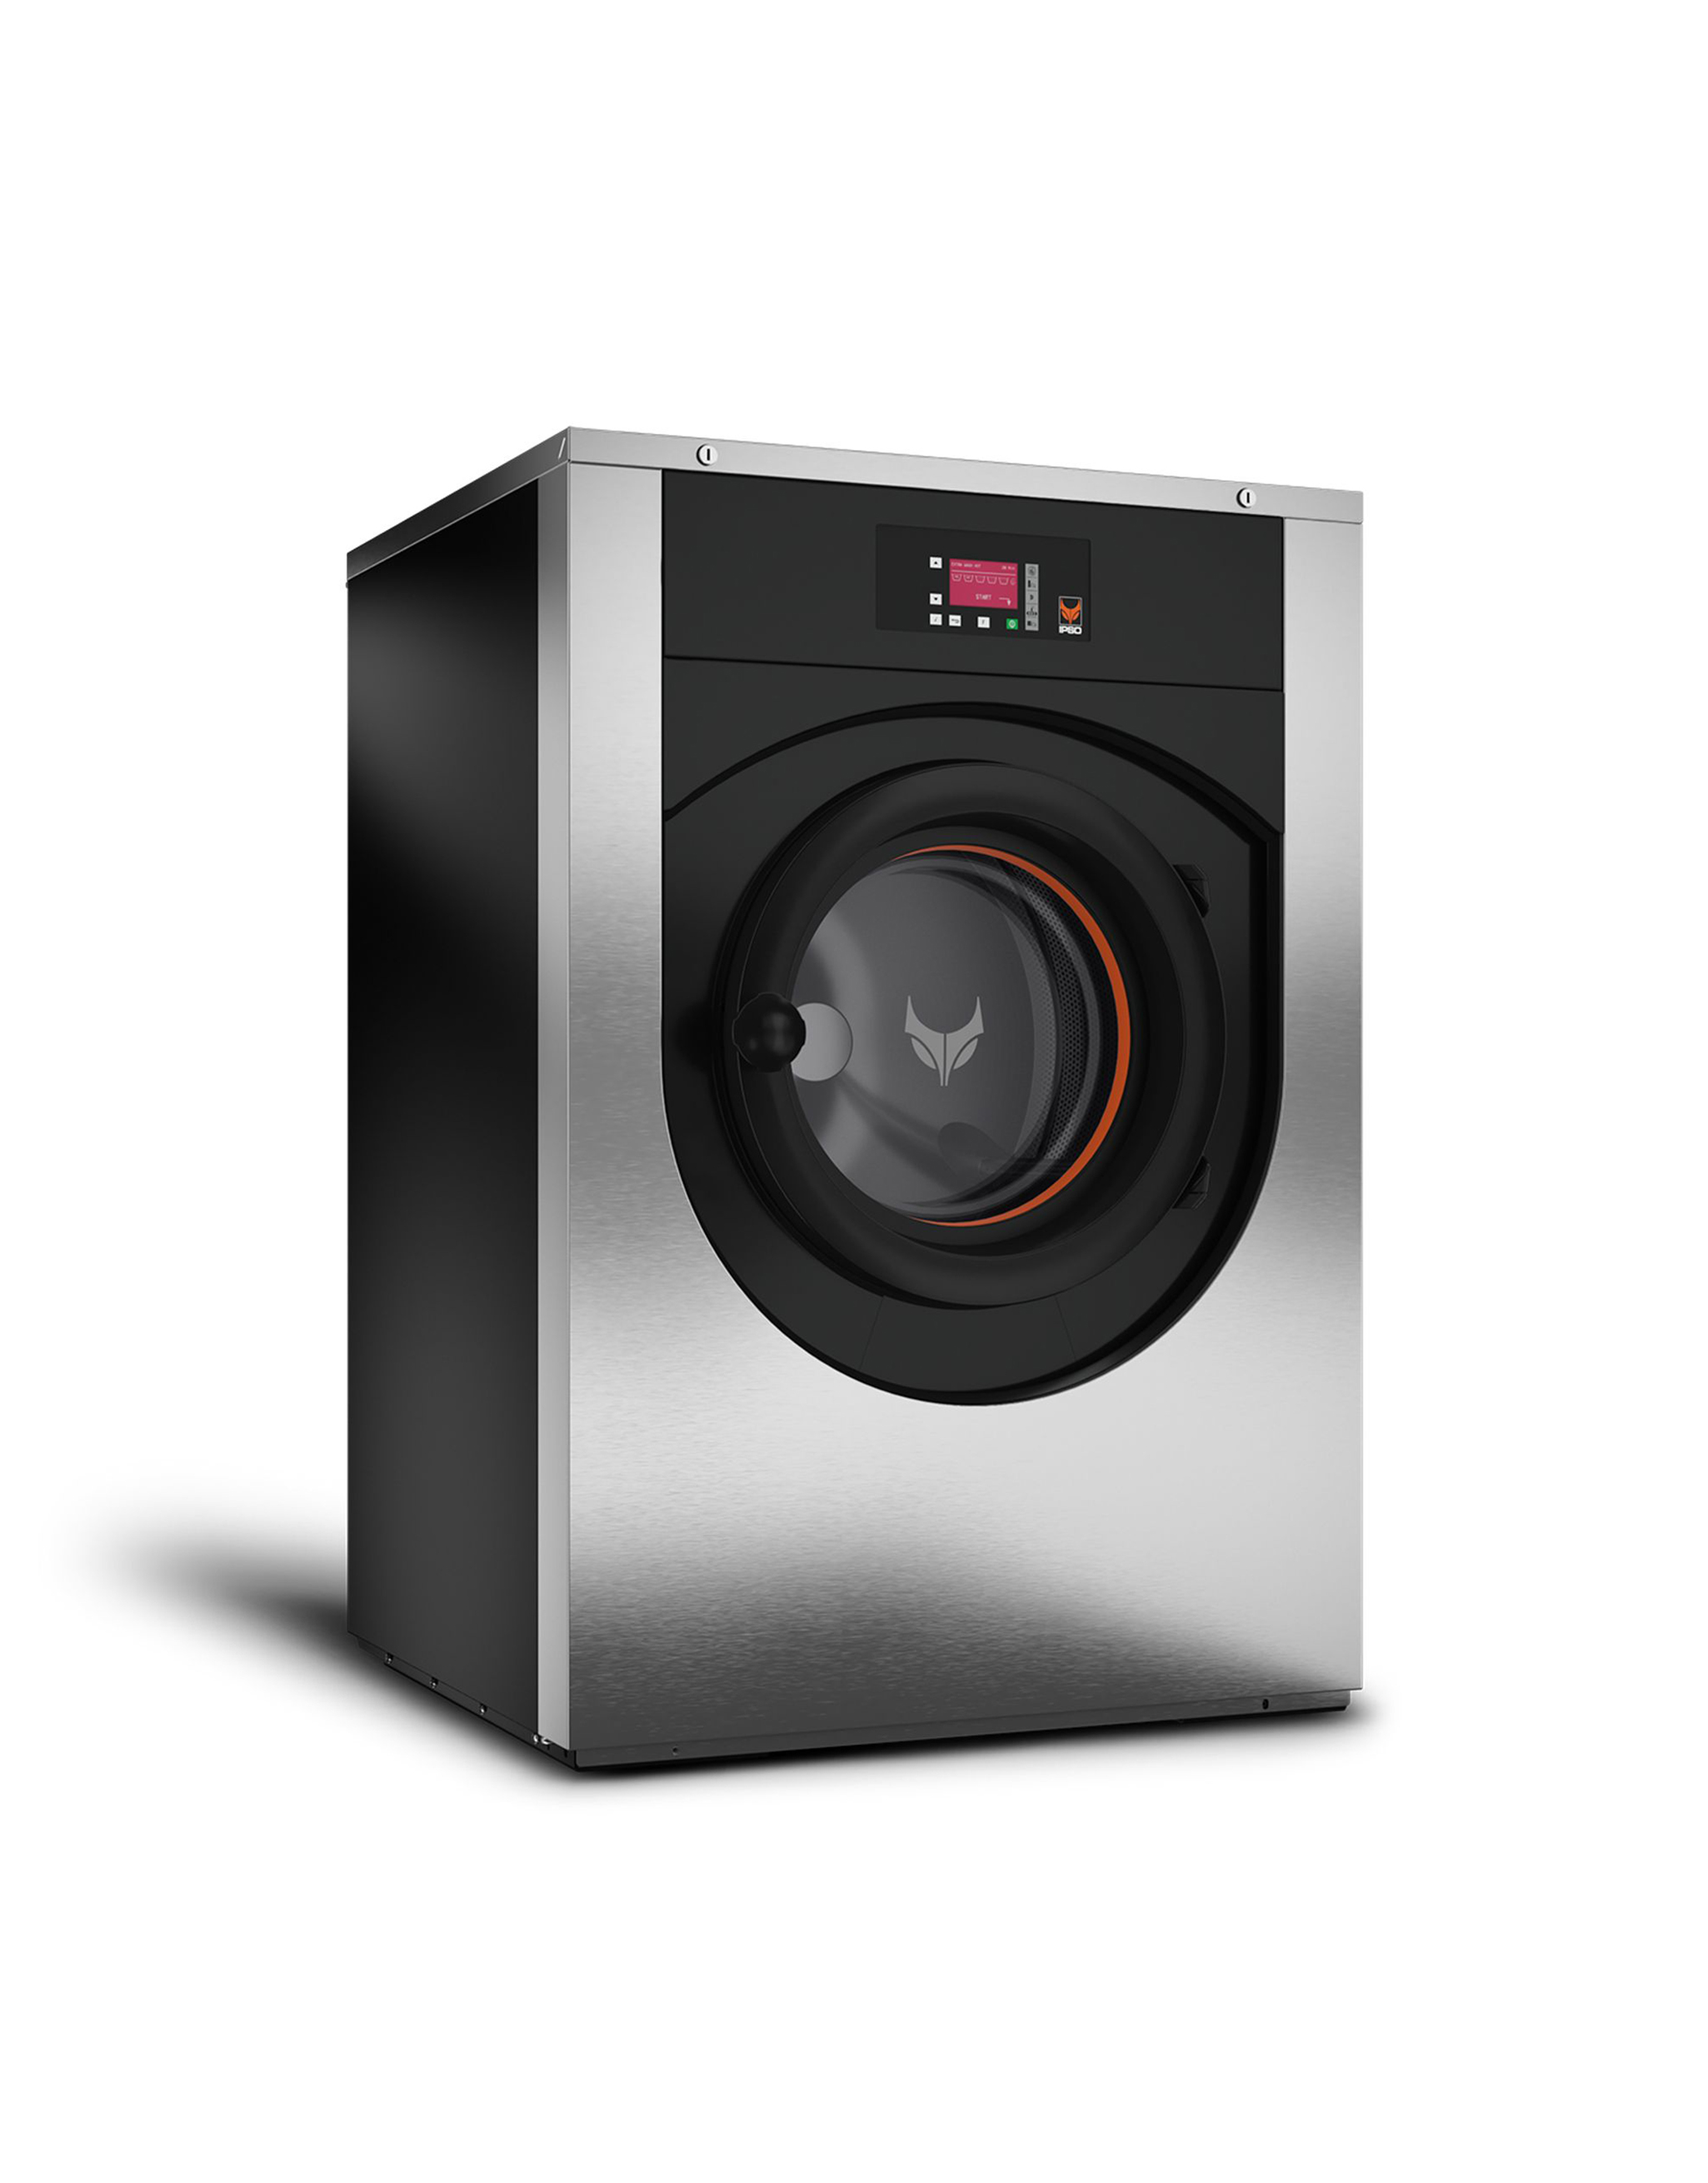 IY180-links-industriele-wasmachine-machine-à-laver-industriel-180-kilo-kg-industrial